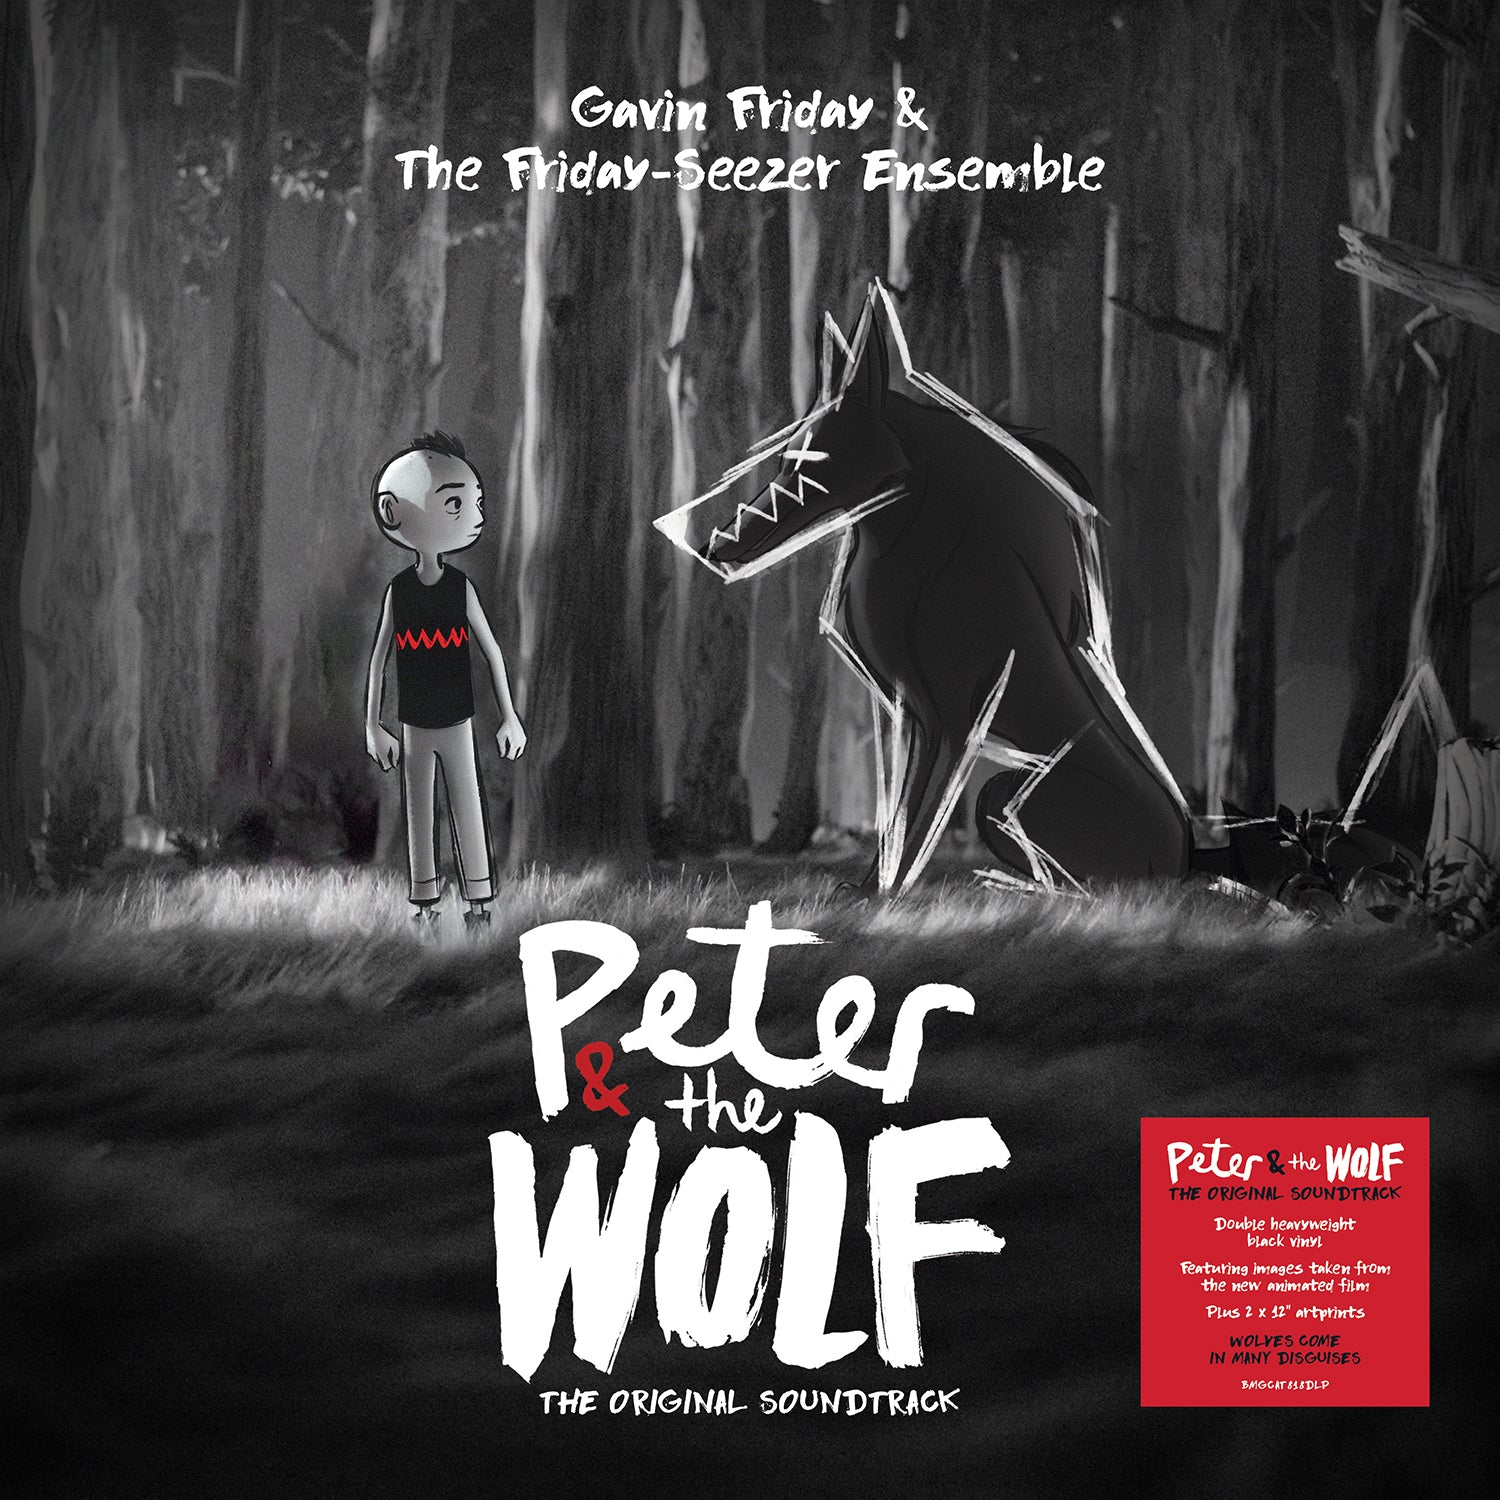 Gavin Friday & The Friday-Seezer Ensemble Peter & The Wolf - Ireland Vinyl